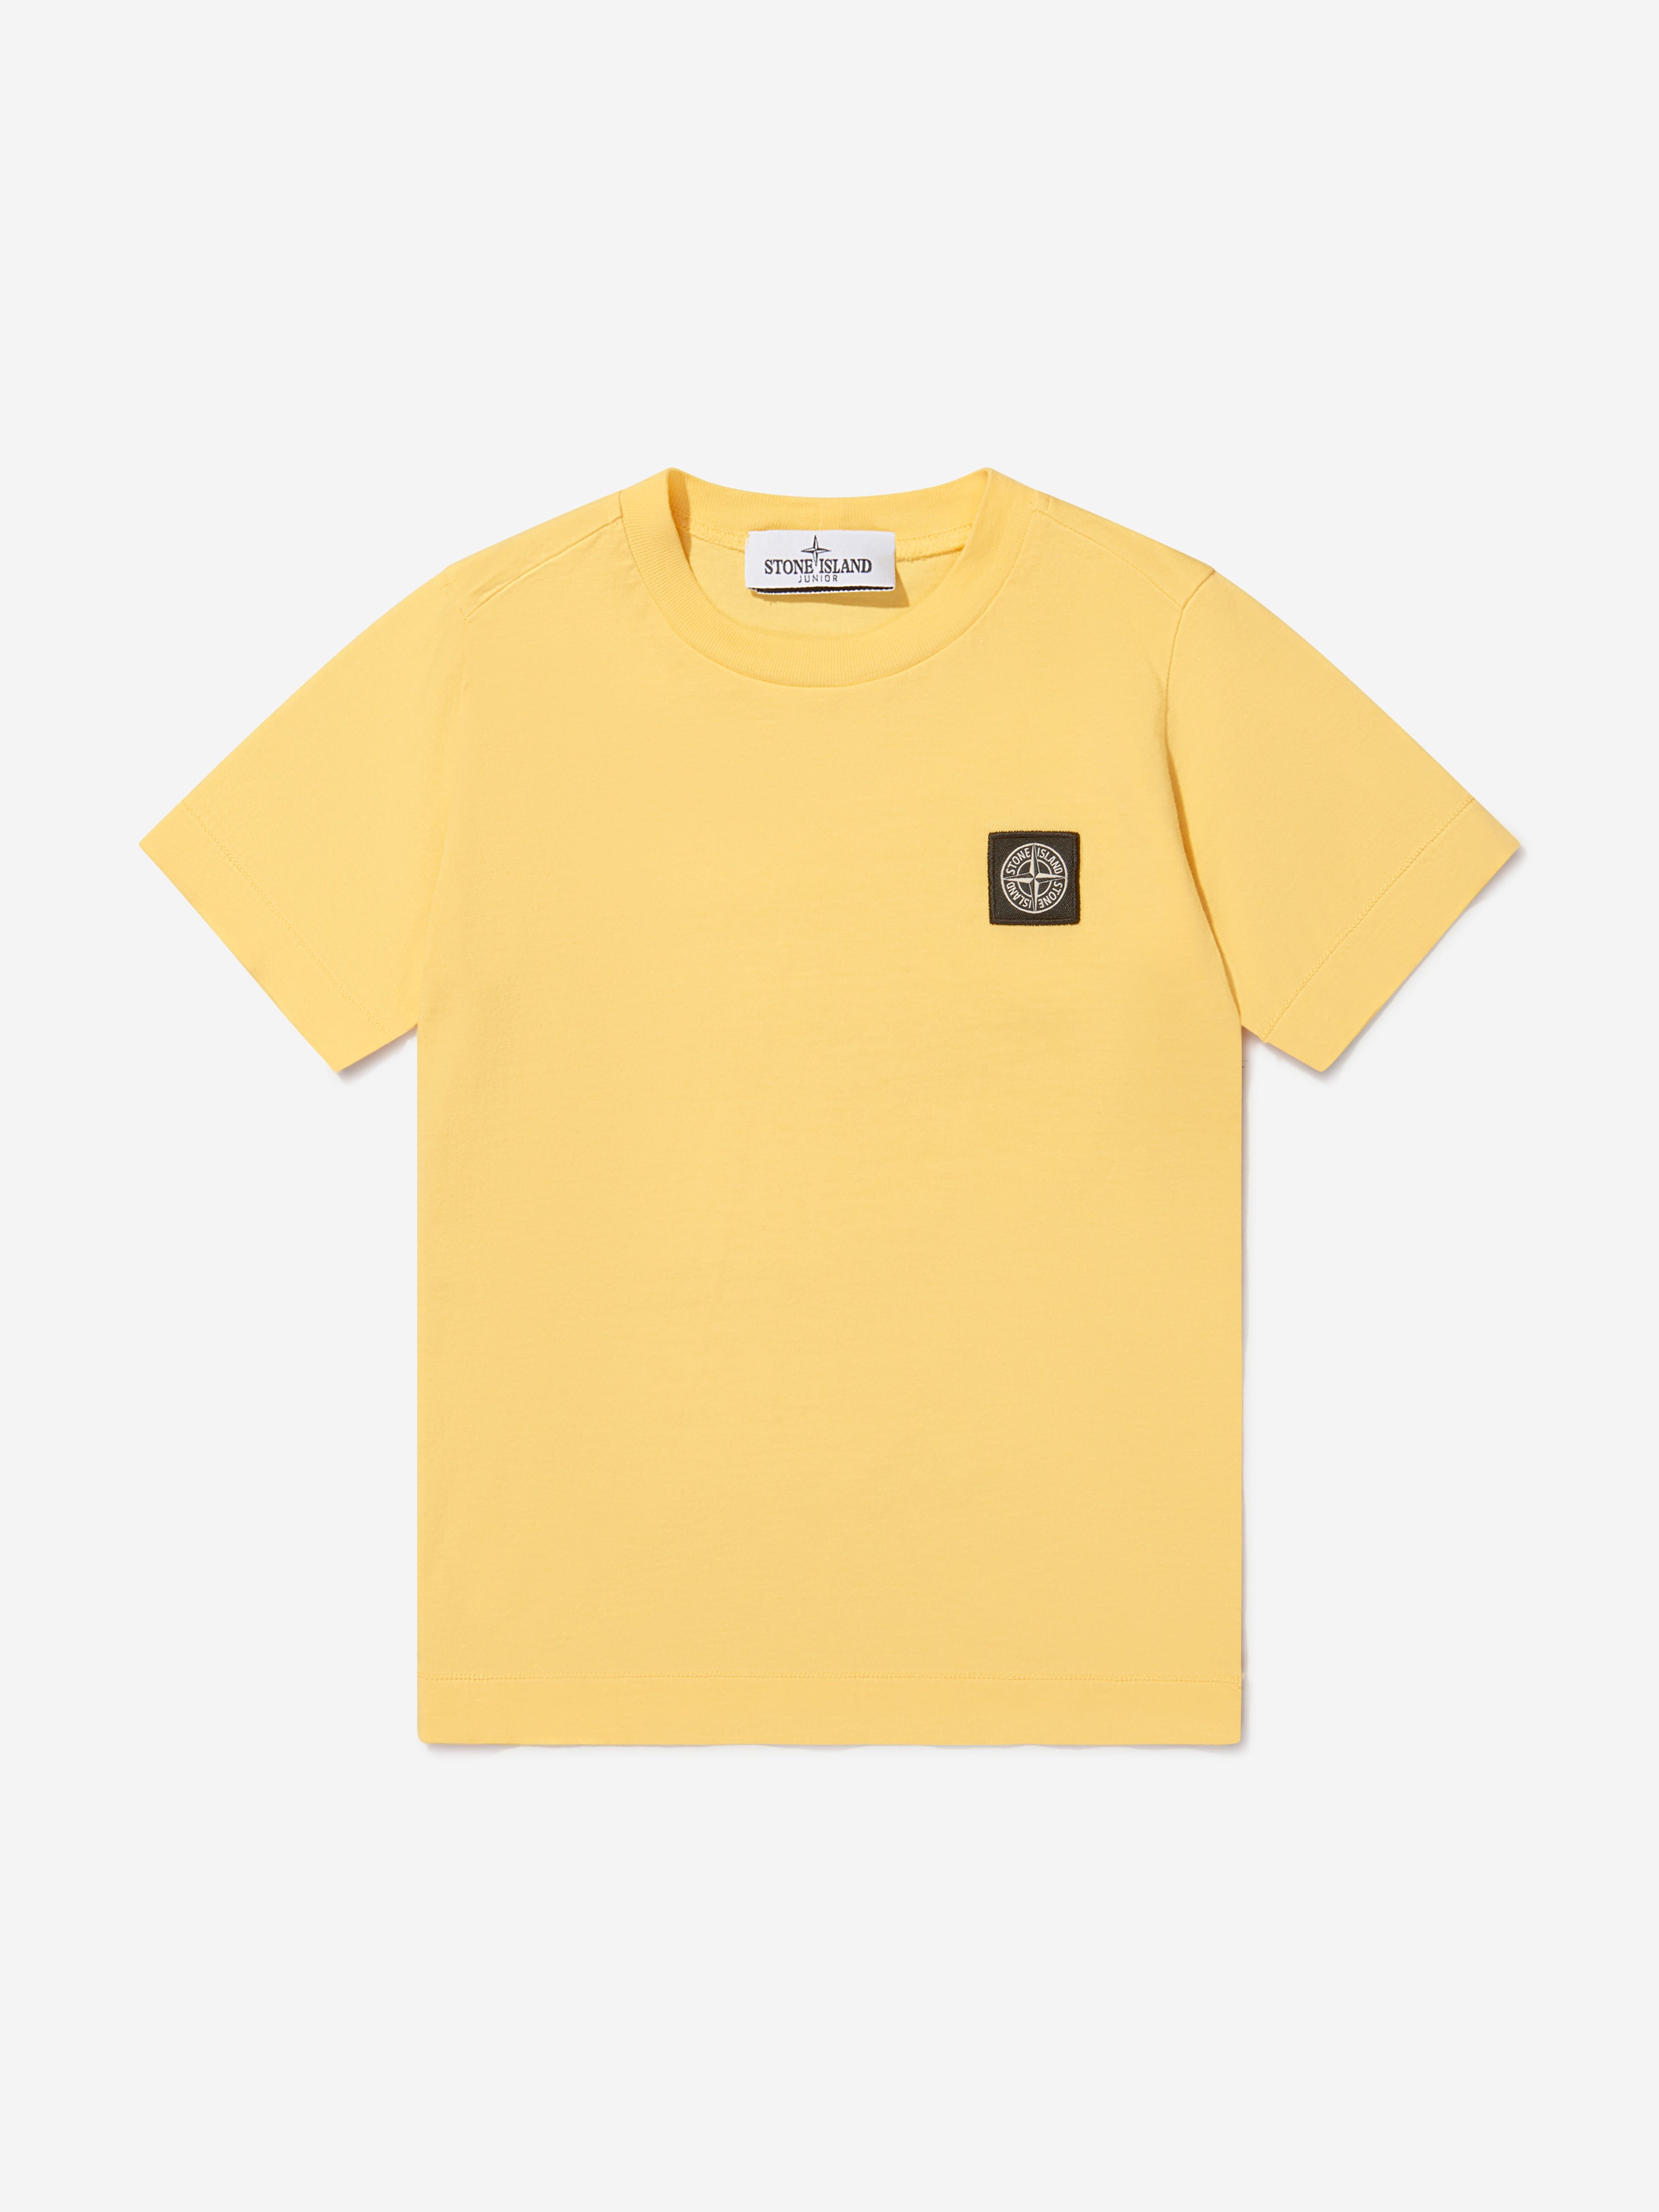 MYAR Boys Cotton Fish Print T-Shirt - Yellow - Size 10Y